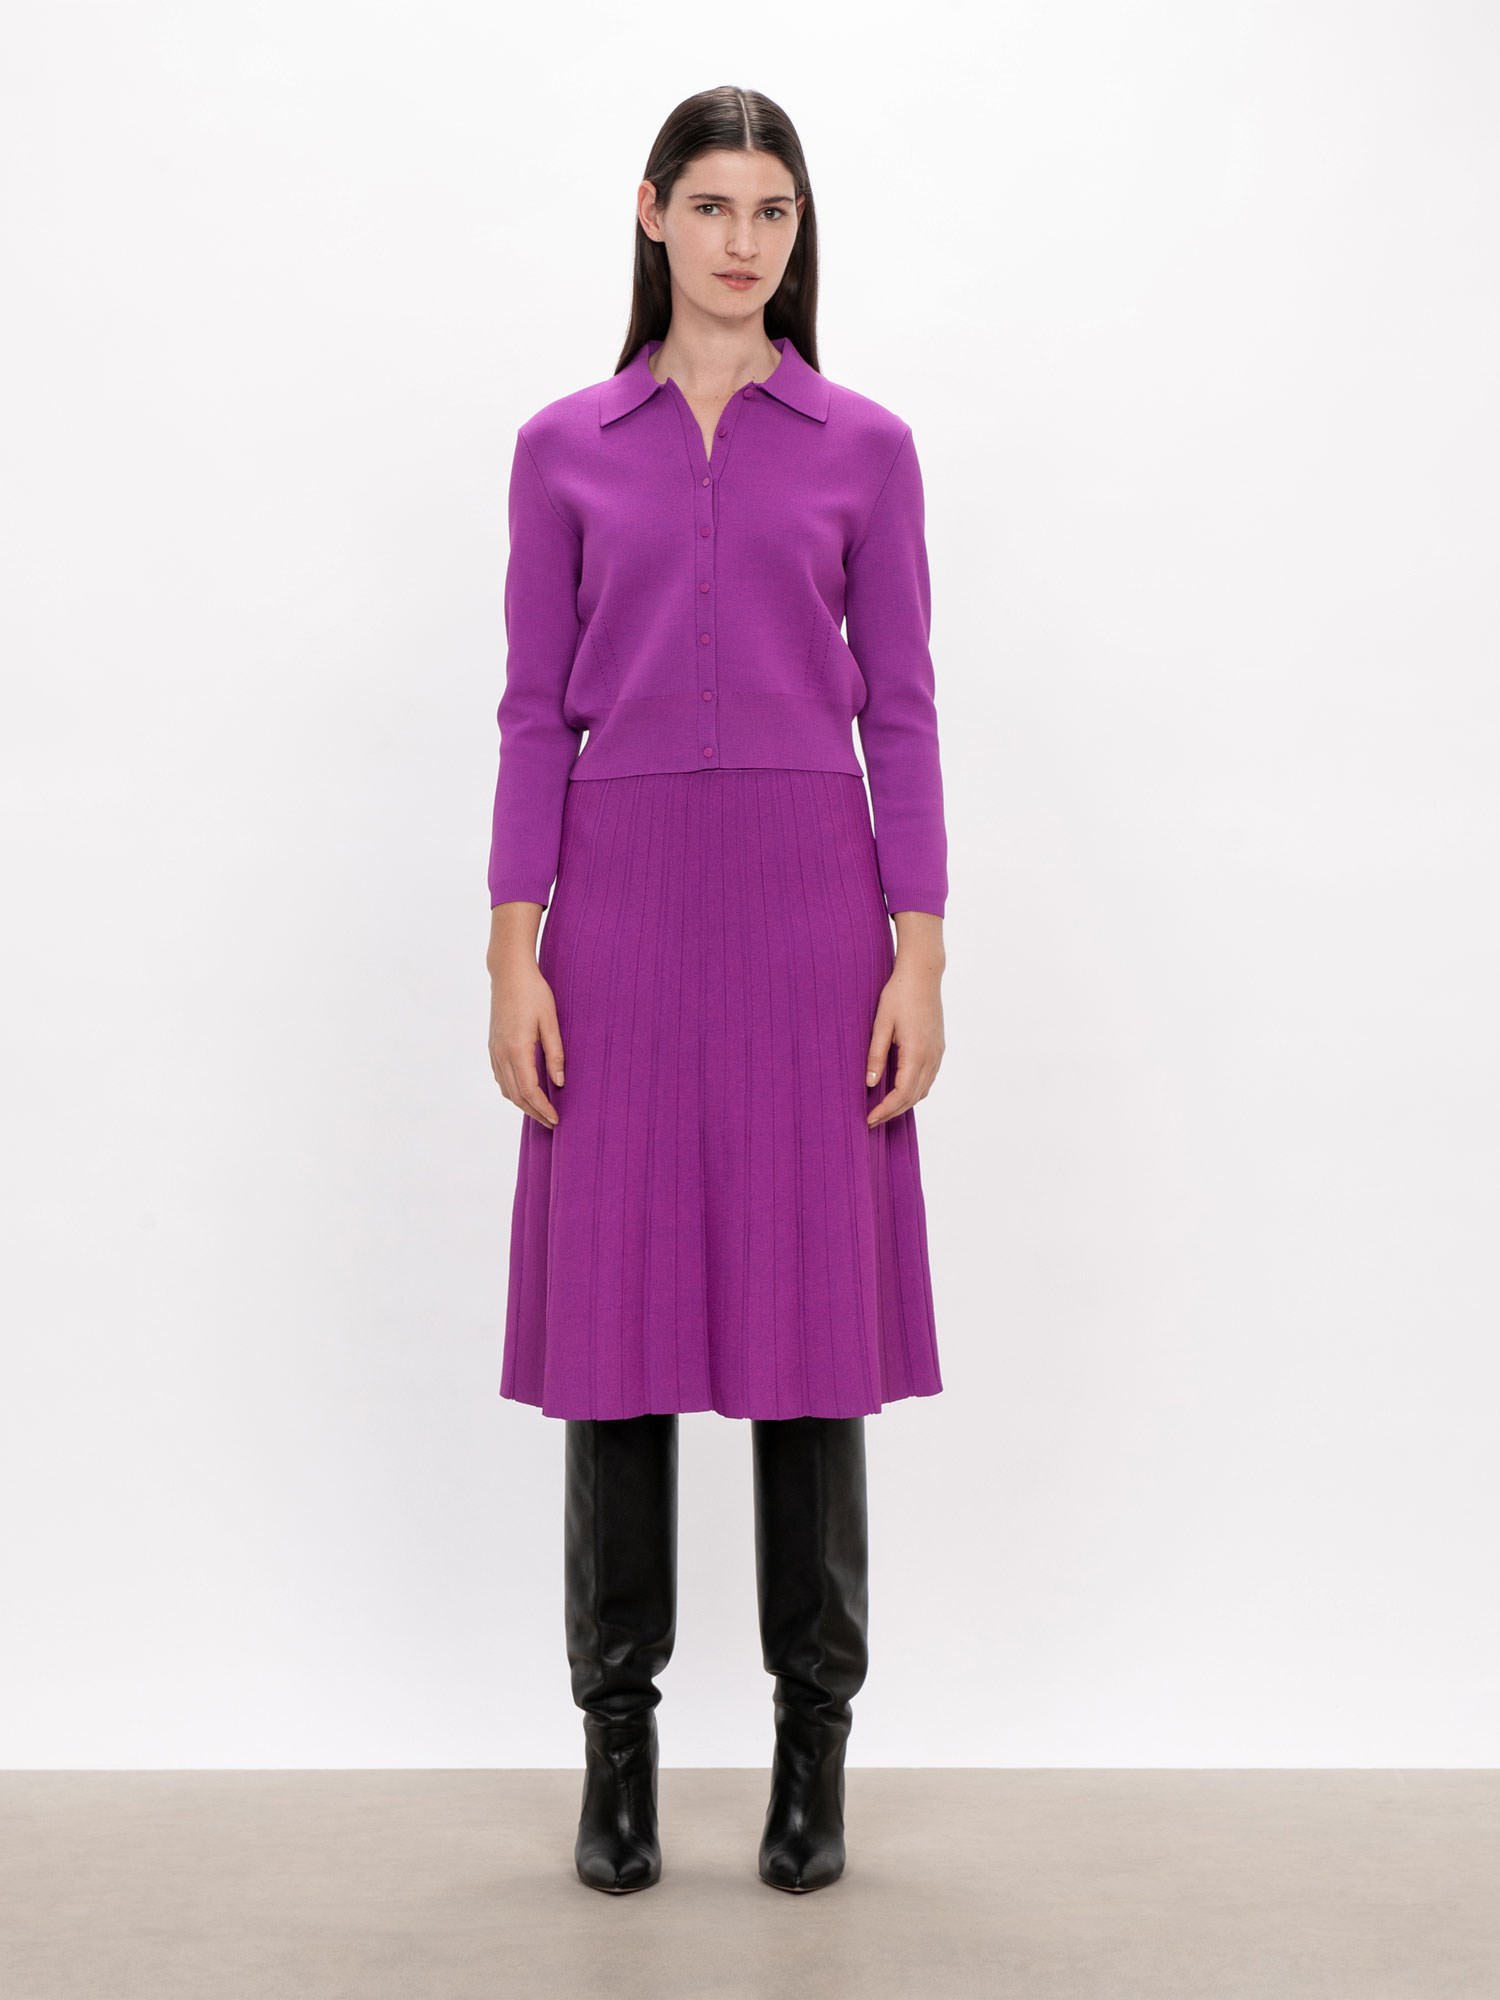 Pleated Knit Short Skirt | Buy Skirts Online - Veronika Maine